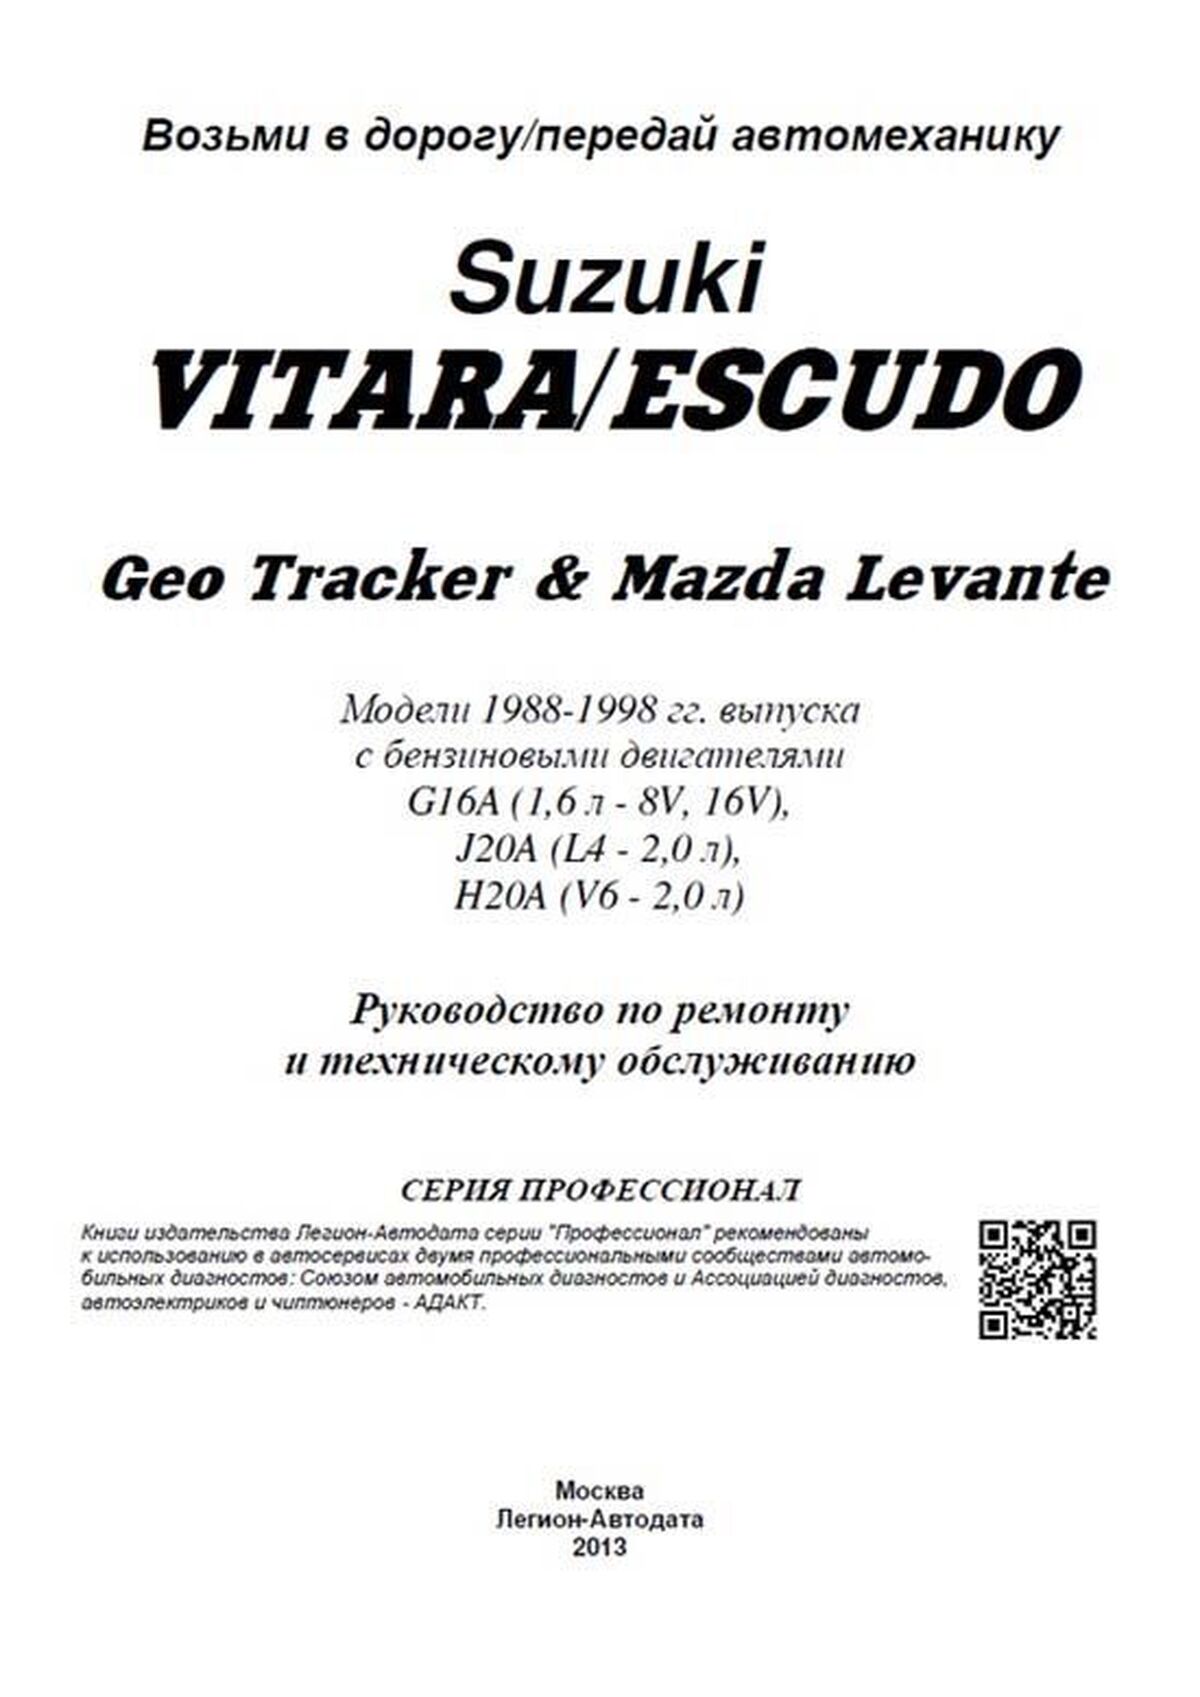 Книга: SUZUKI VITARA / ESCUDO  /  GEO TRACKER / MAZDA LEVANTE  (б) 1988-1998 г.в., рем., экспл., то, сер.ПРОФ. | Легион-Aвтодата